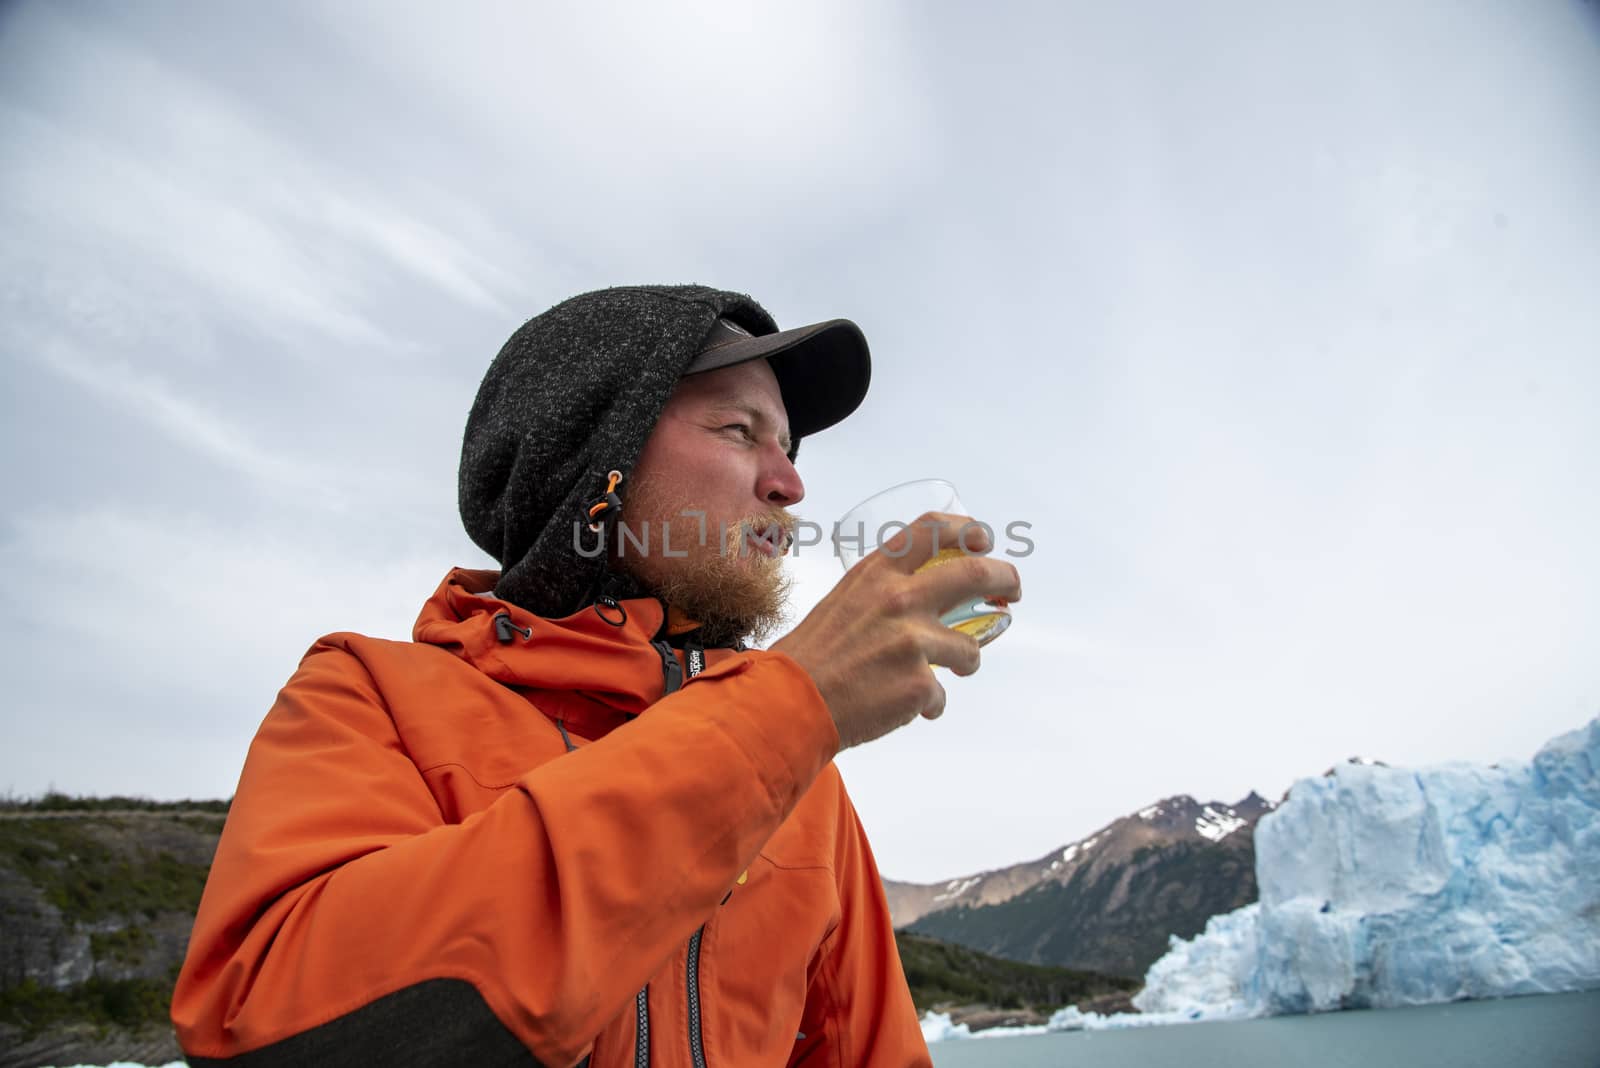 Drinking Whiskey with glacier ice at The Perito Moreno Glacier, El Calafate, Argentina